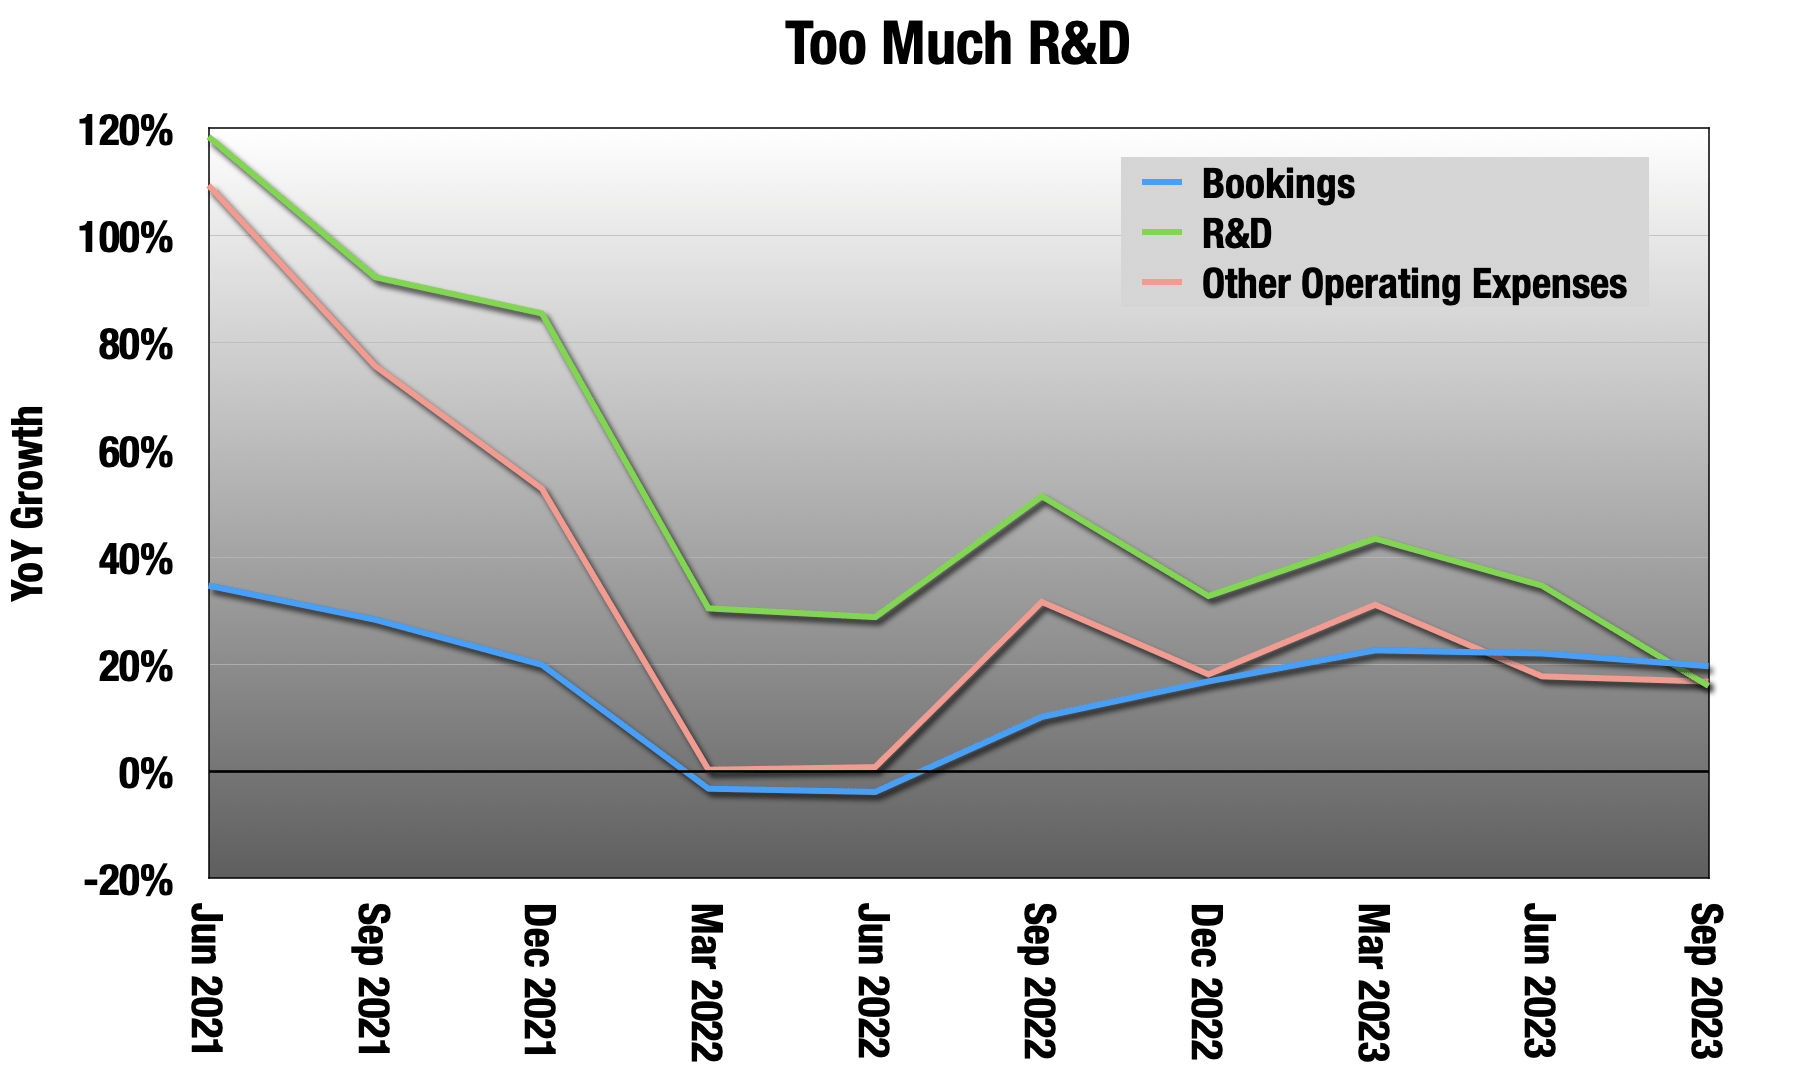 Roblox Stock Price: Will RBLX Stock Price Fill the Gap Zone?